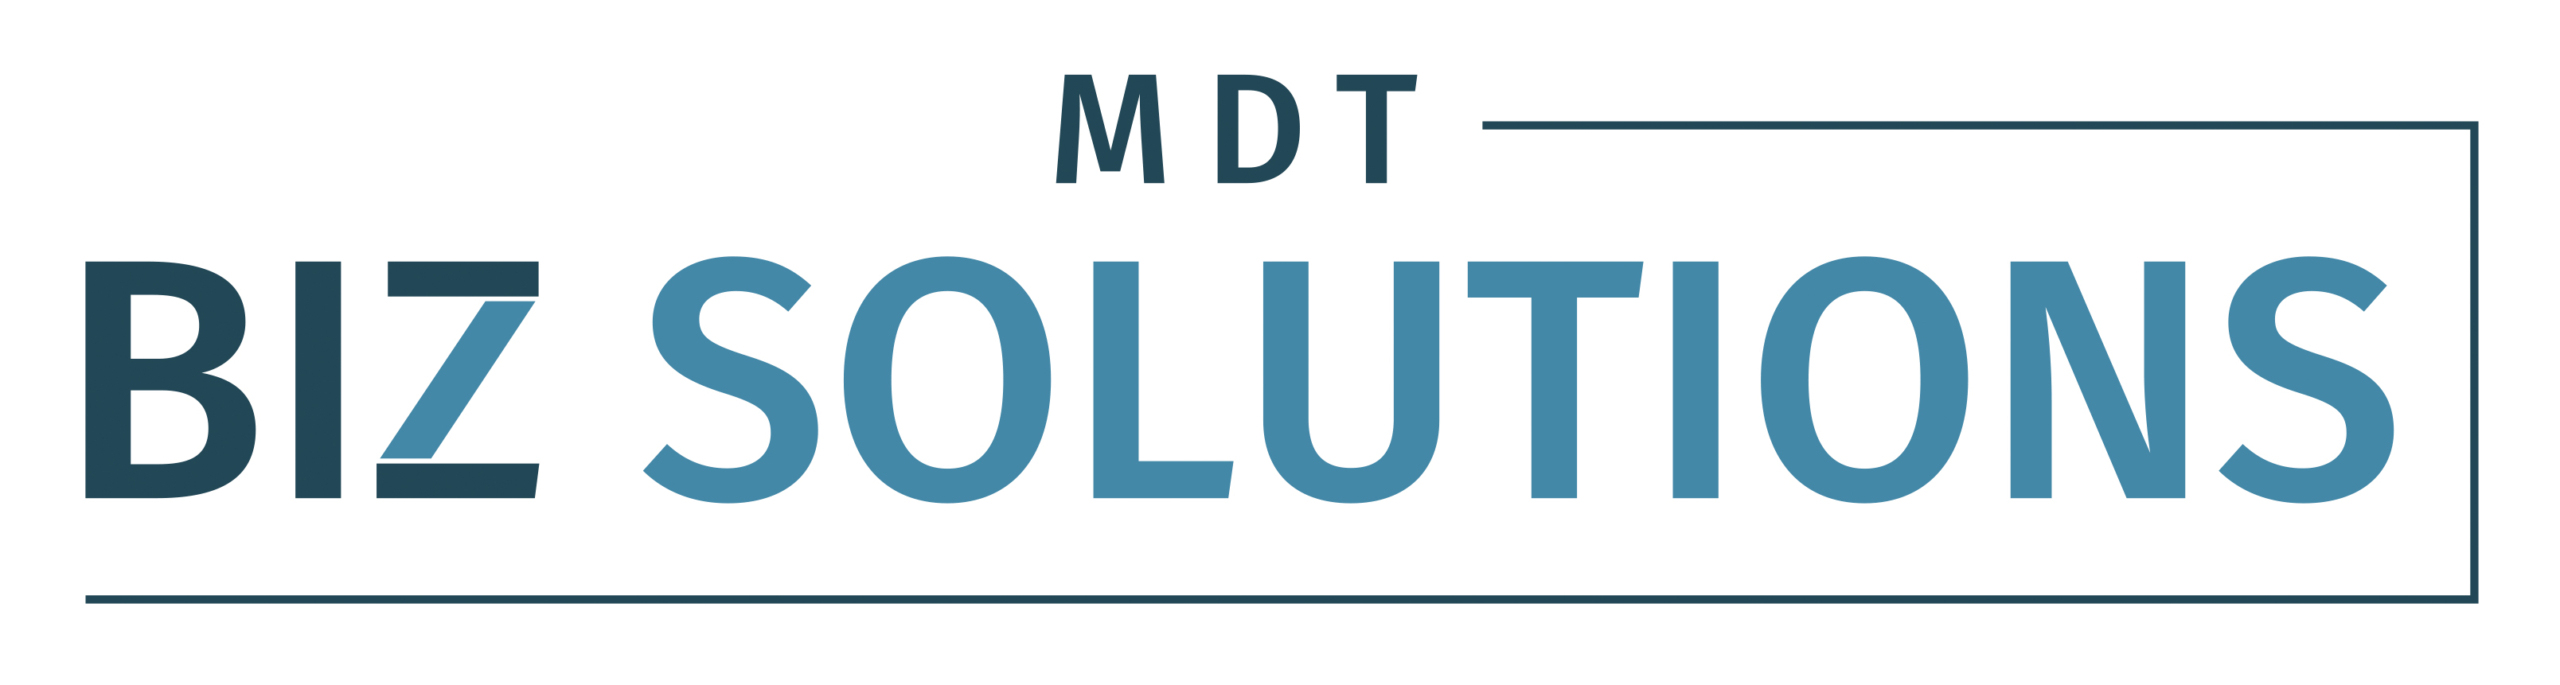 MDT Biz Solutions Ltd